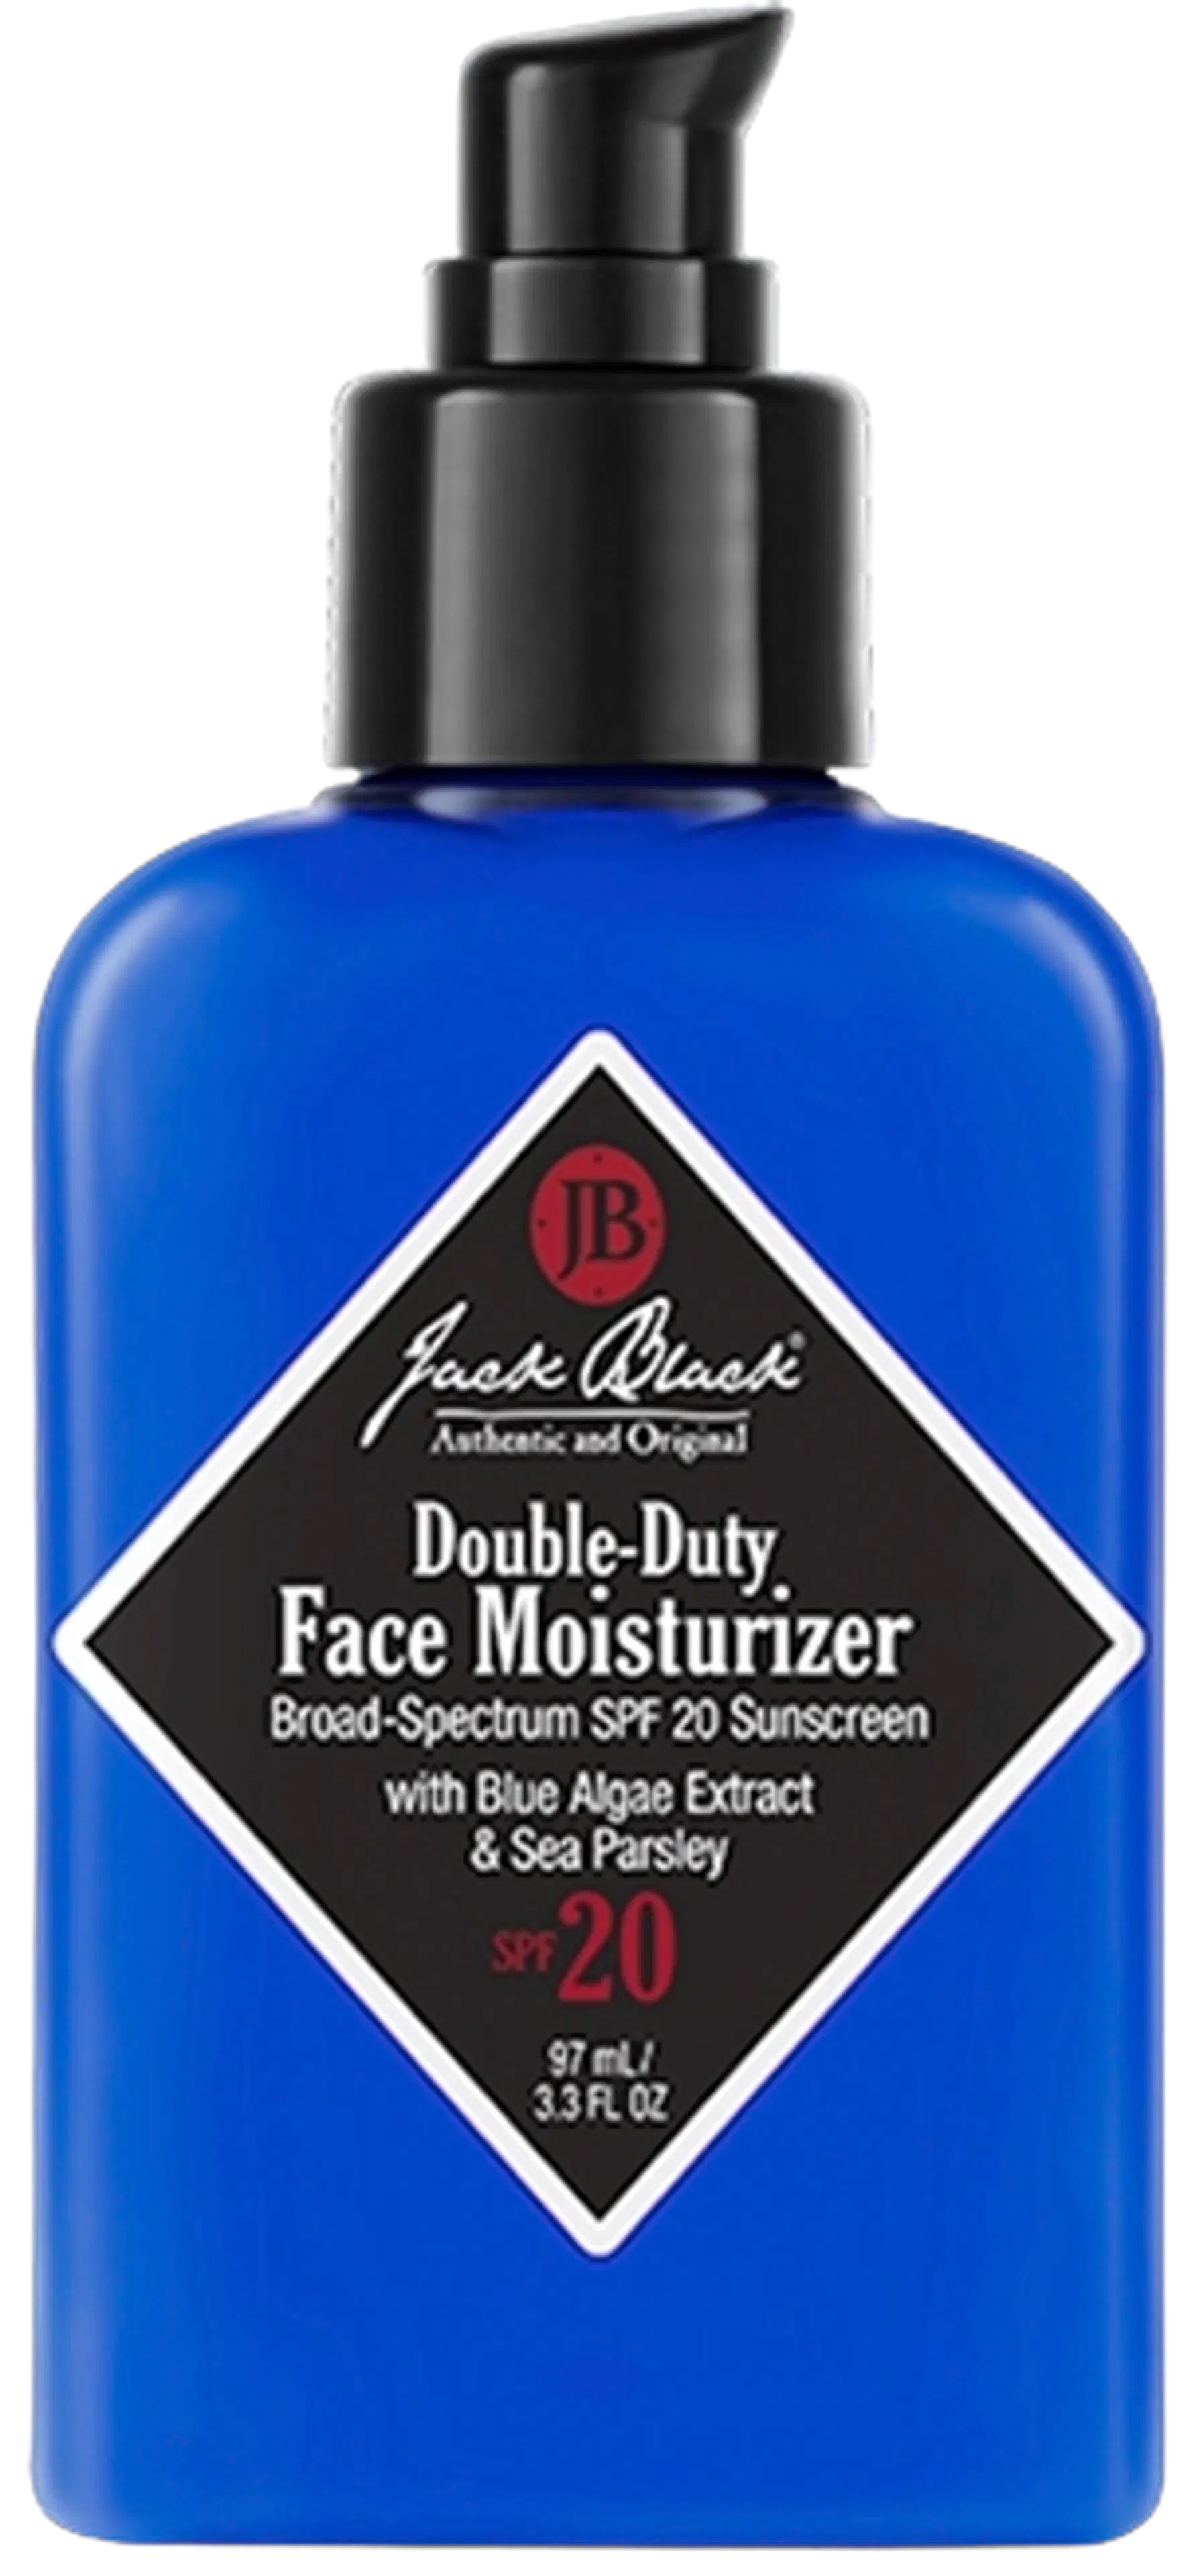 Jack Black Double-Duty Face Moisturizer SPF 20 pump kasvovoide 97 ml